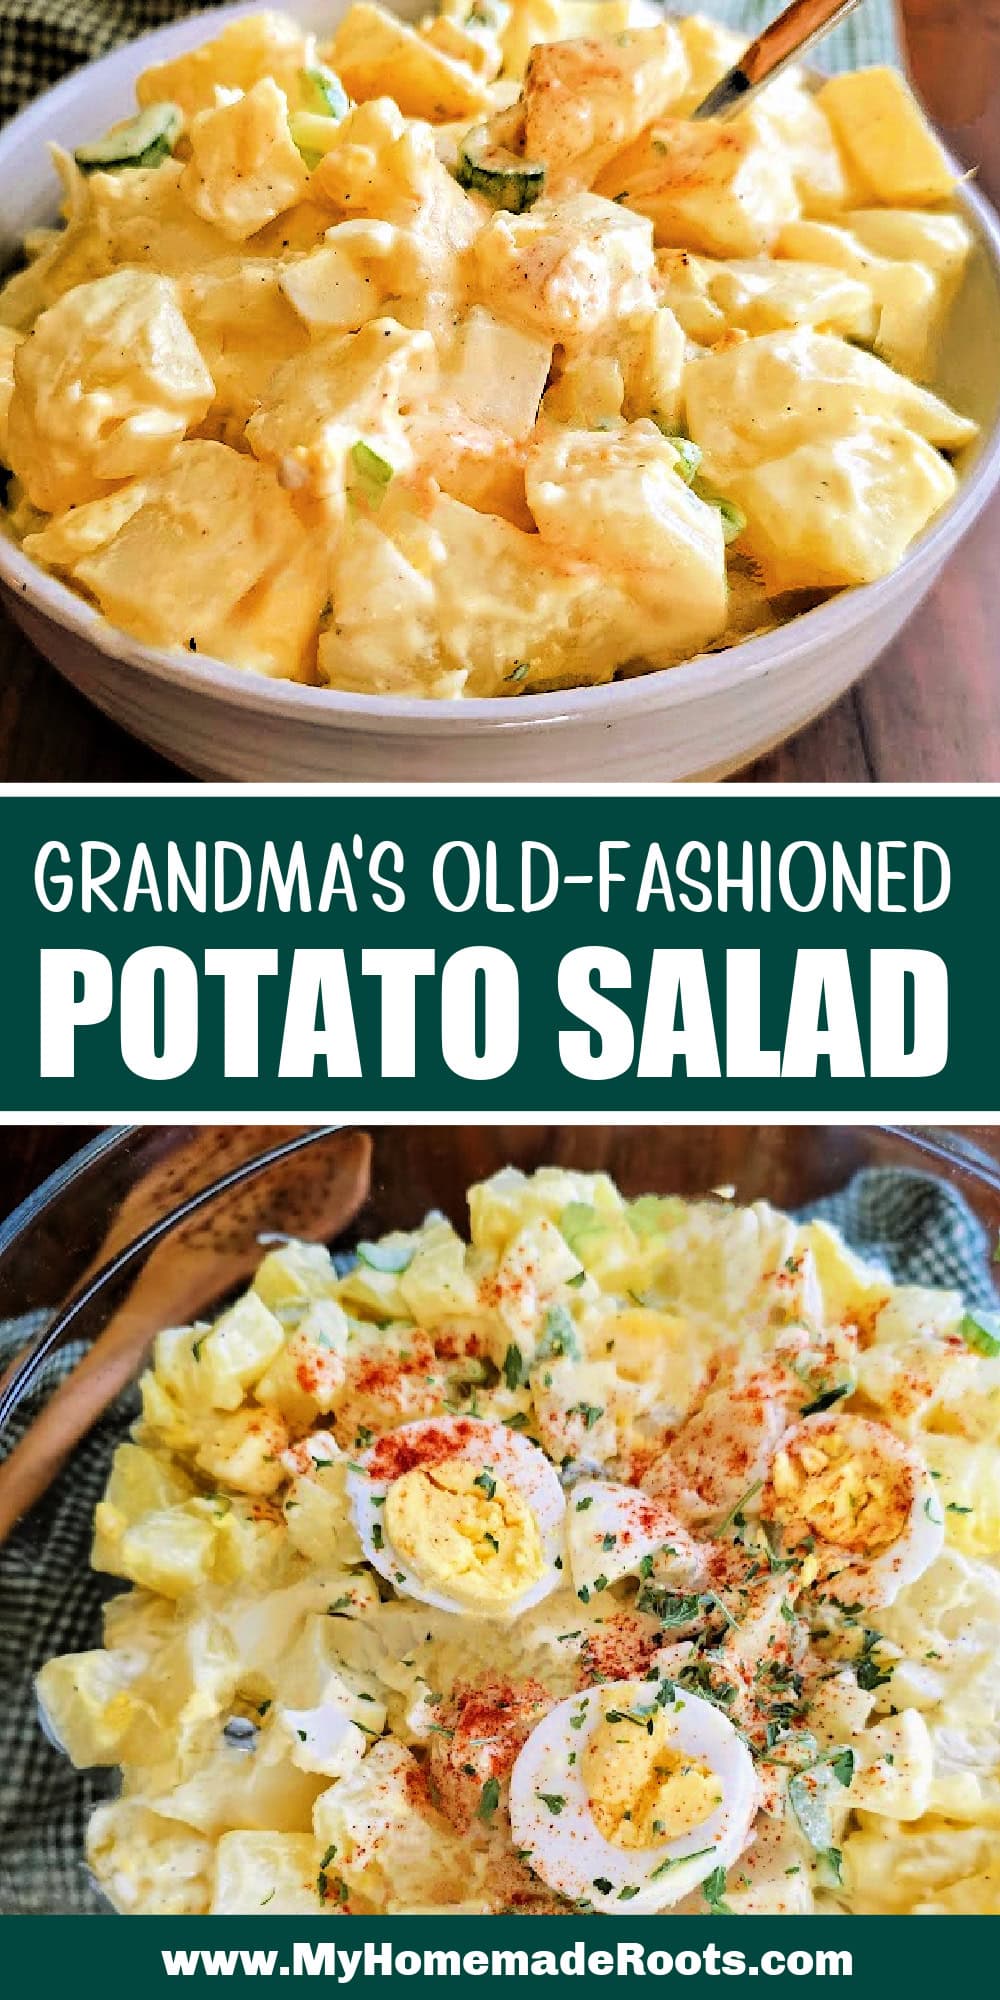 Grandma's Old-Fashioned Potato Salad